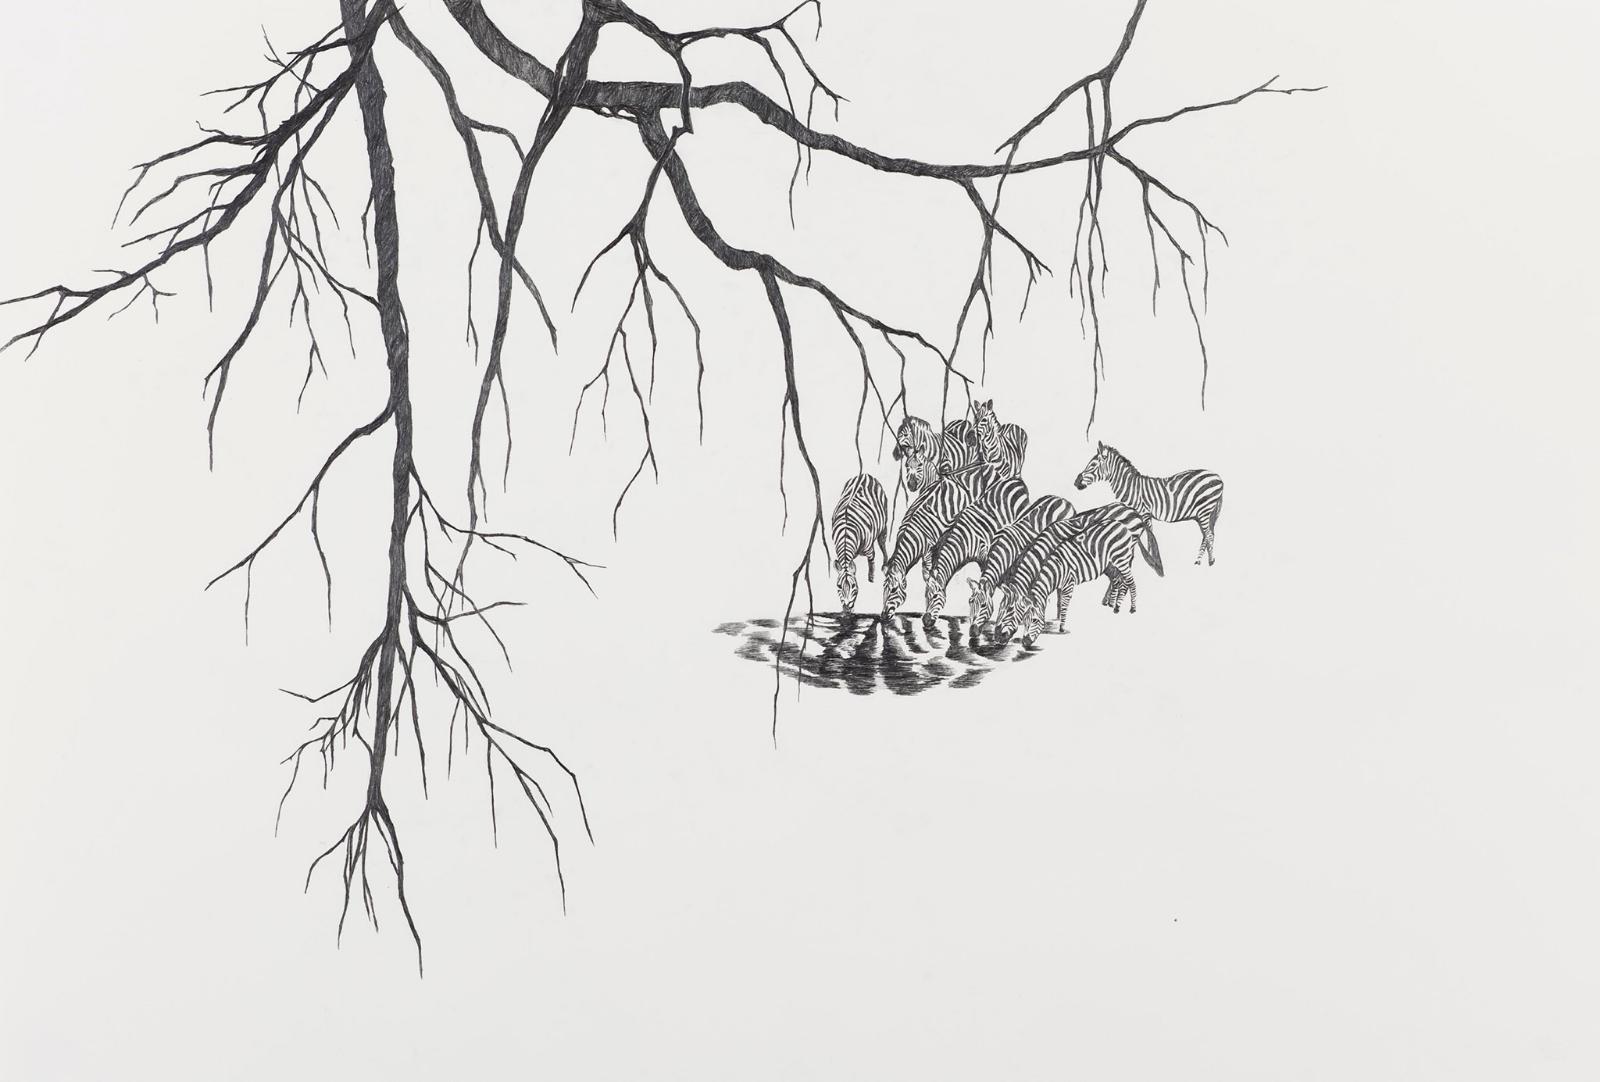 Uta Siebert, Serie Safarie, (Zebras), 2009, Grafit auf Papier, 63 cm x 82 cm, Preis auf Anfrage, siu006kü